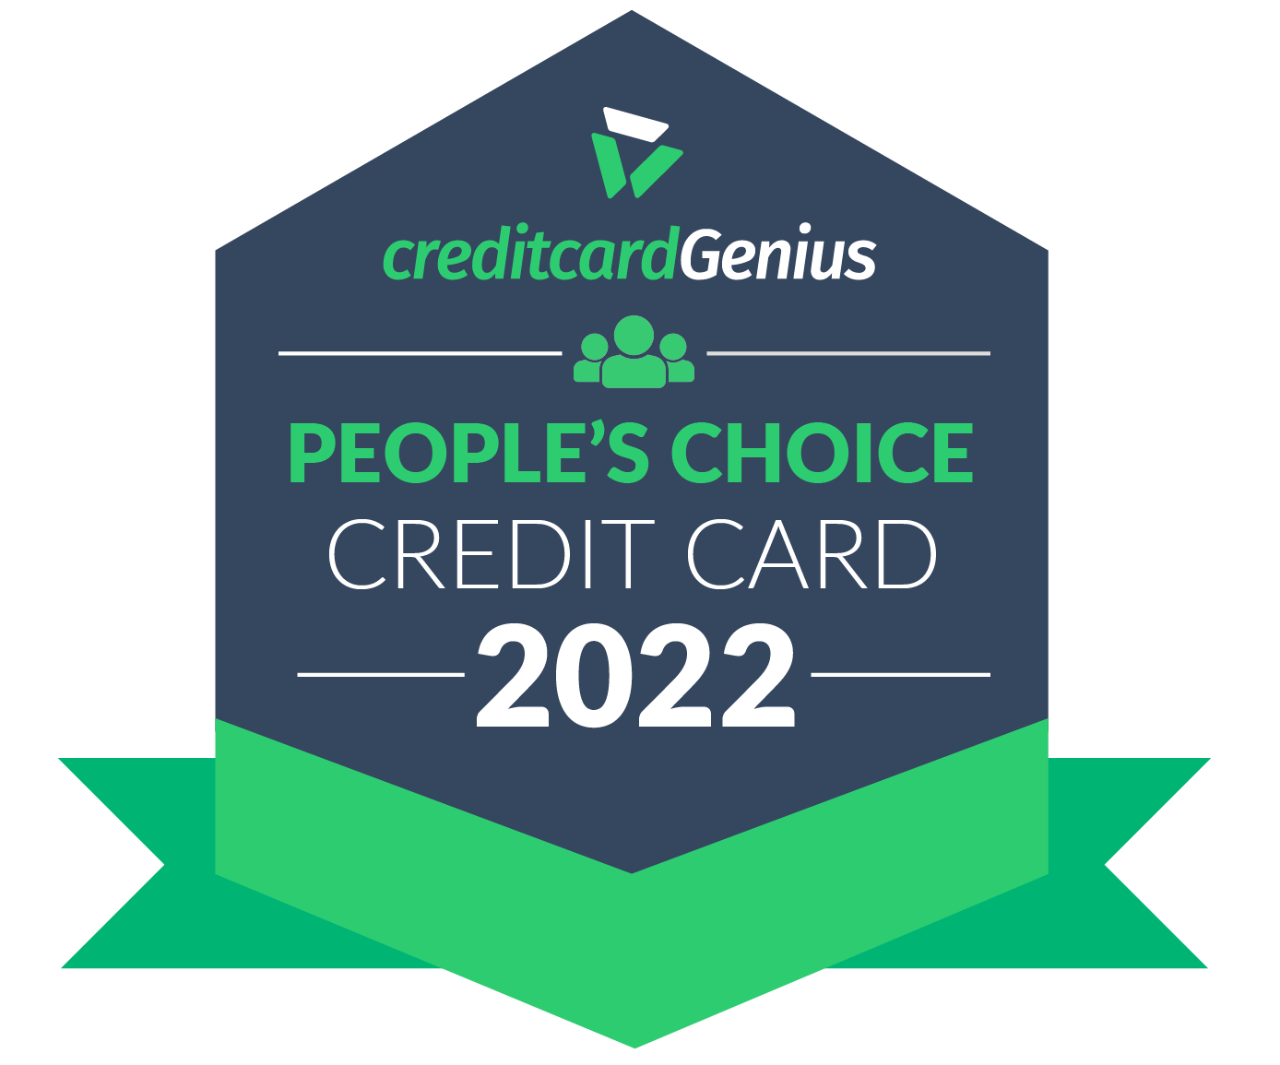 Badge: Winner of the 2021 CreditcardGenius People’s Choice Credit Card.